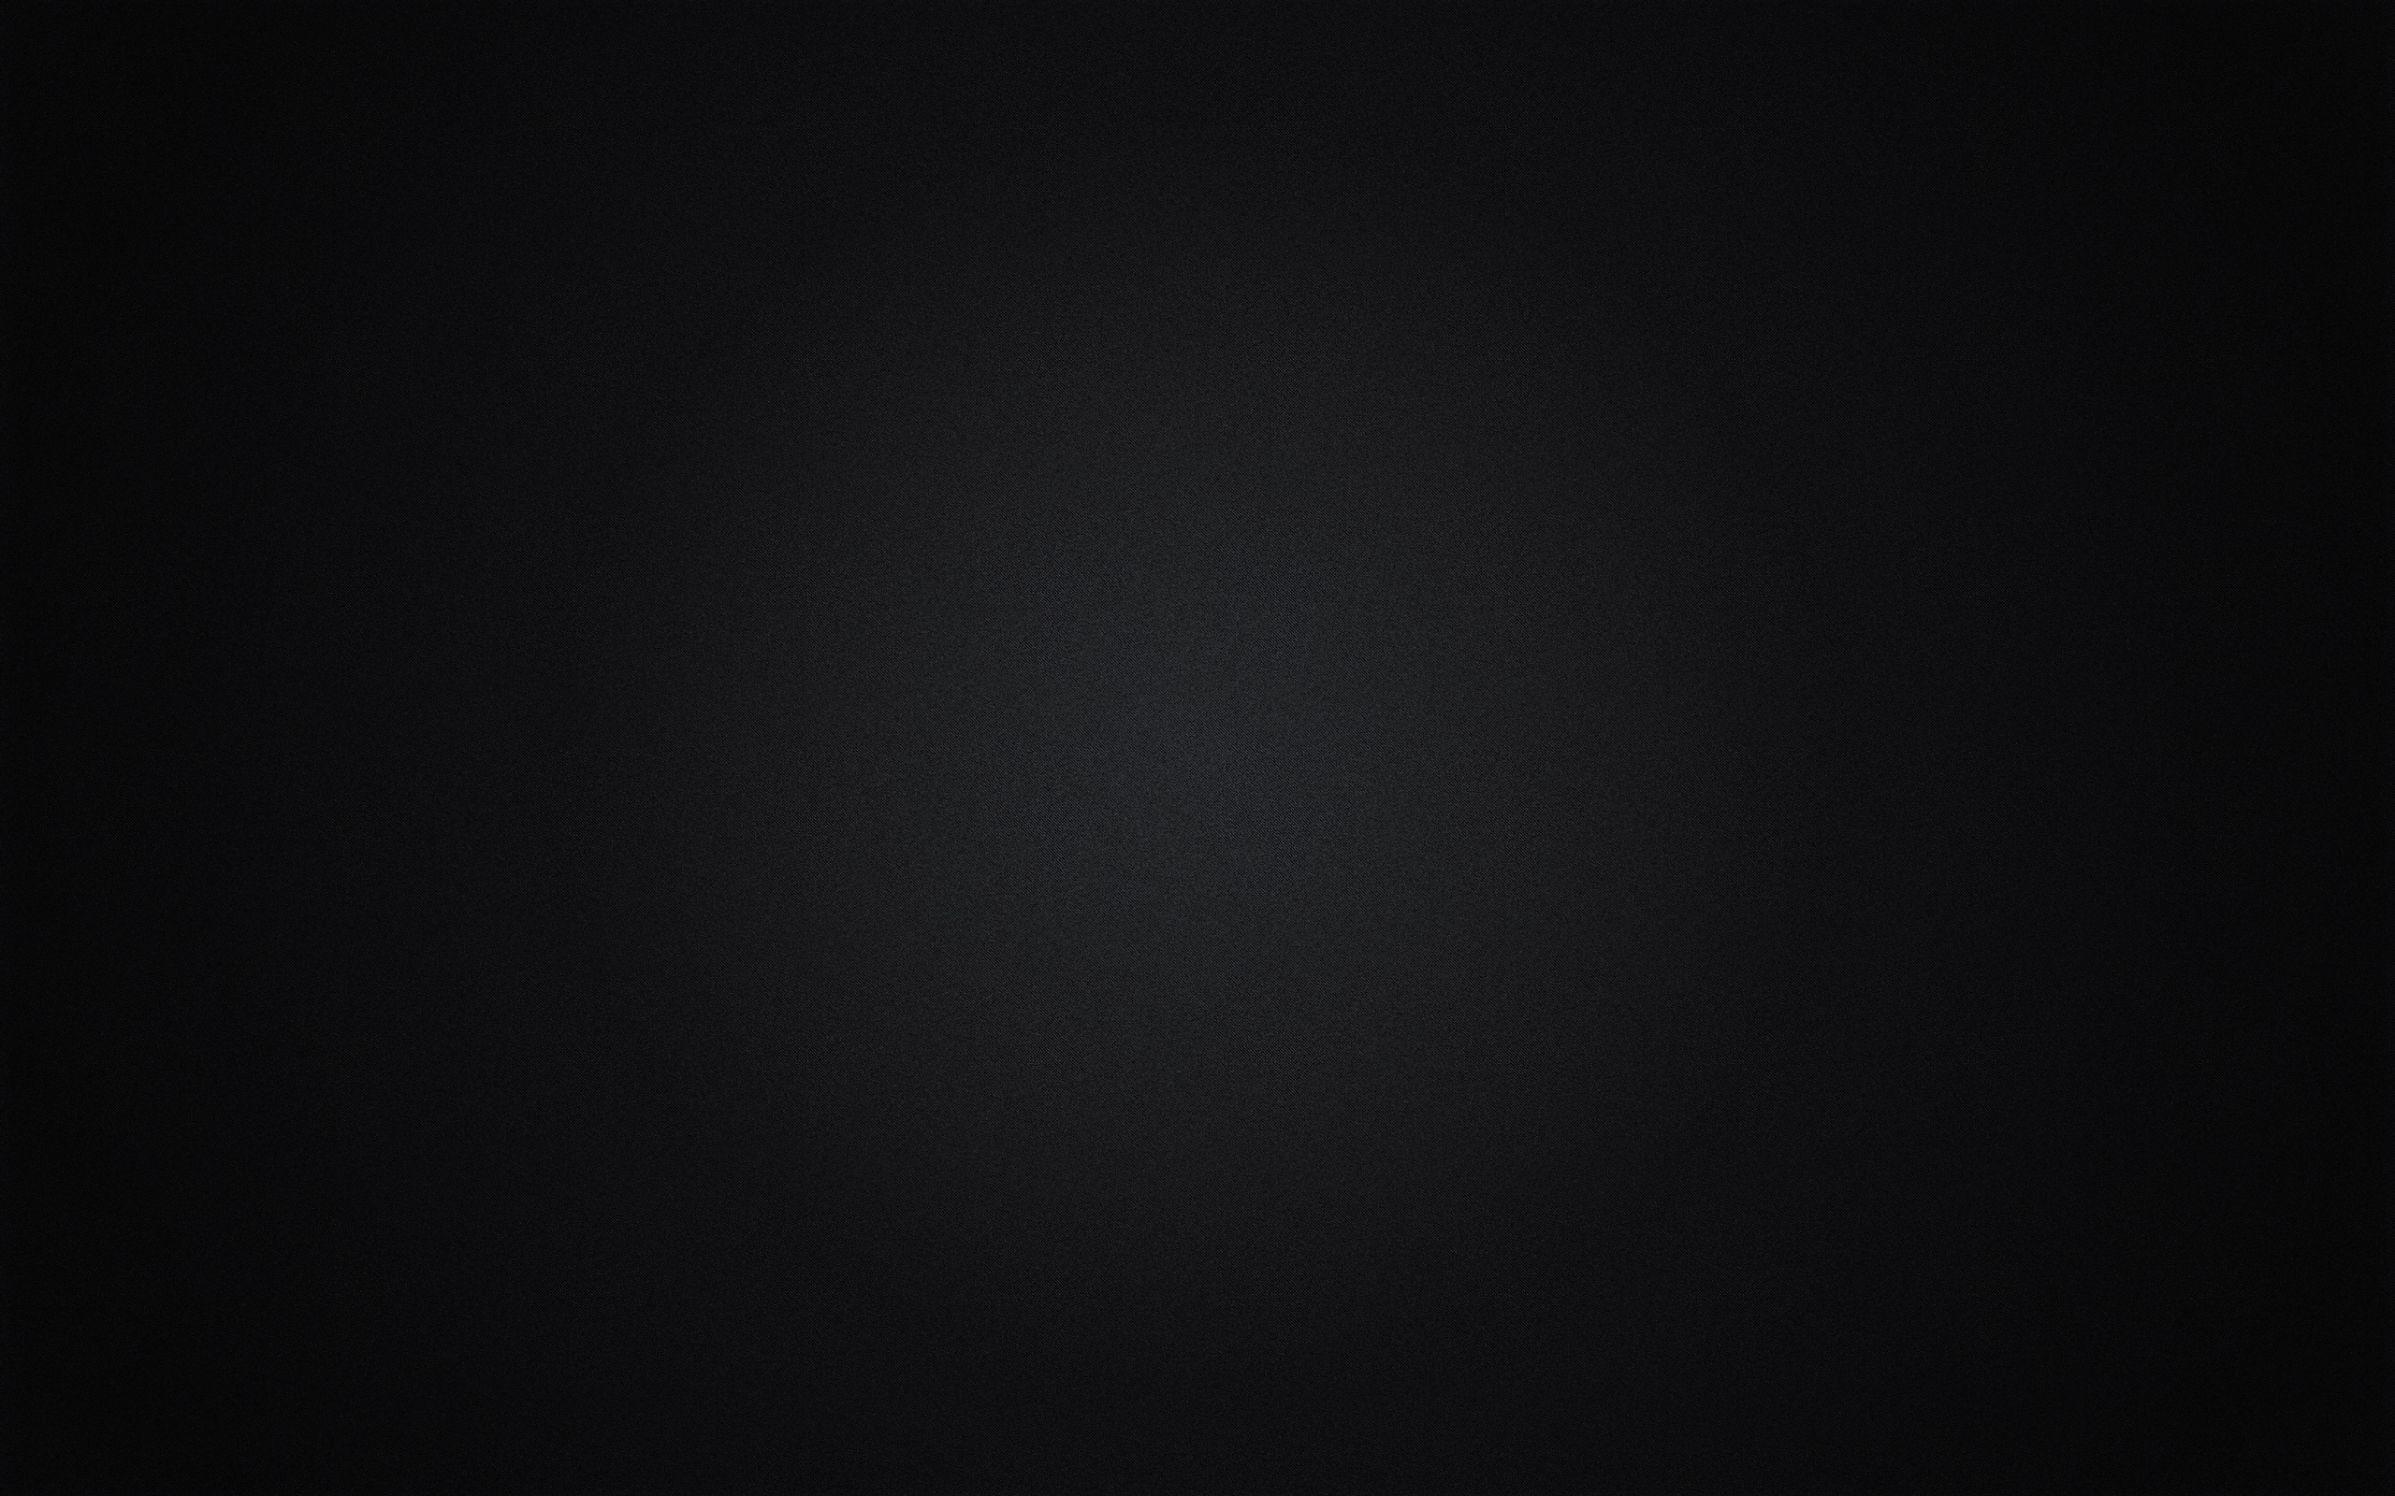 Solid Black Background Blank